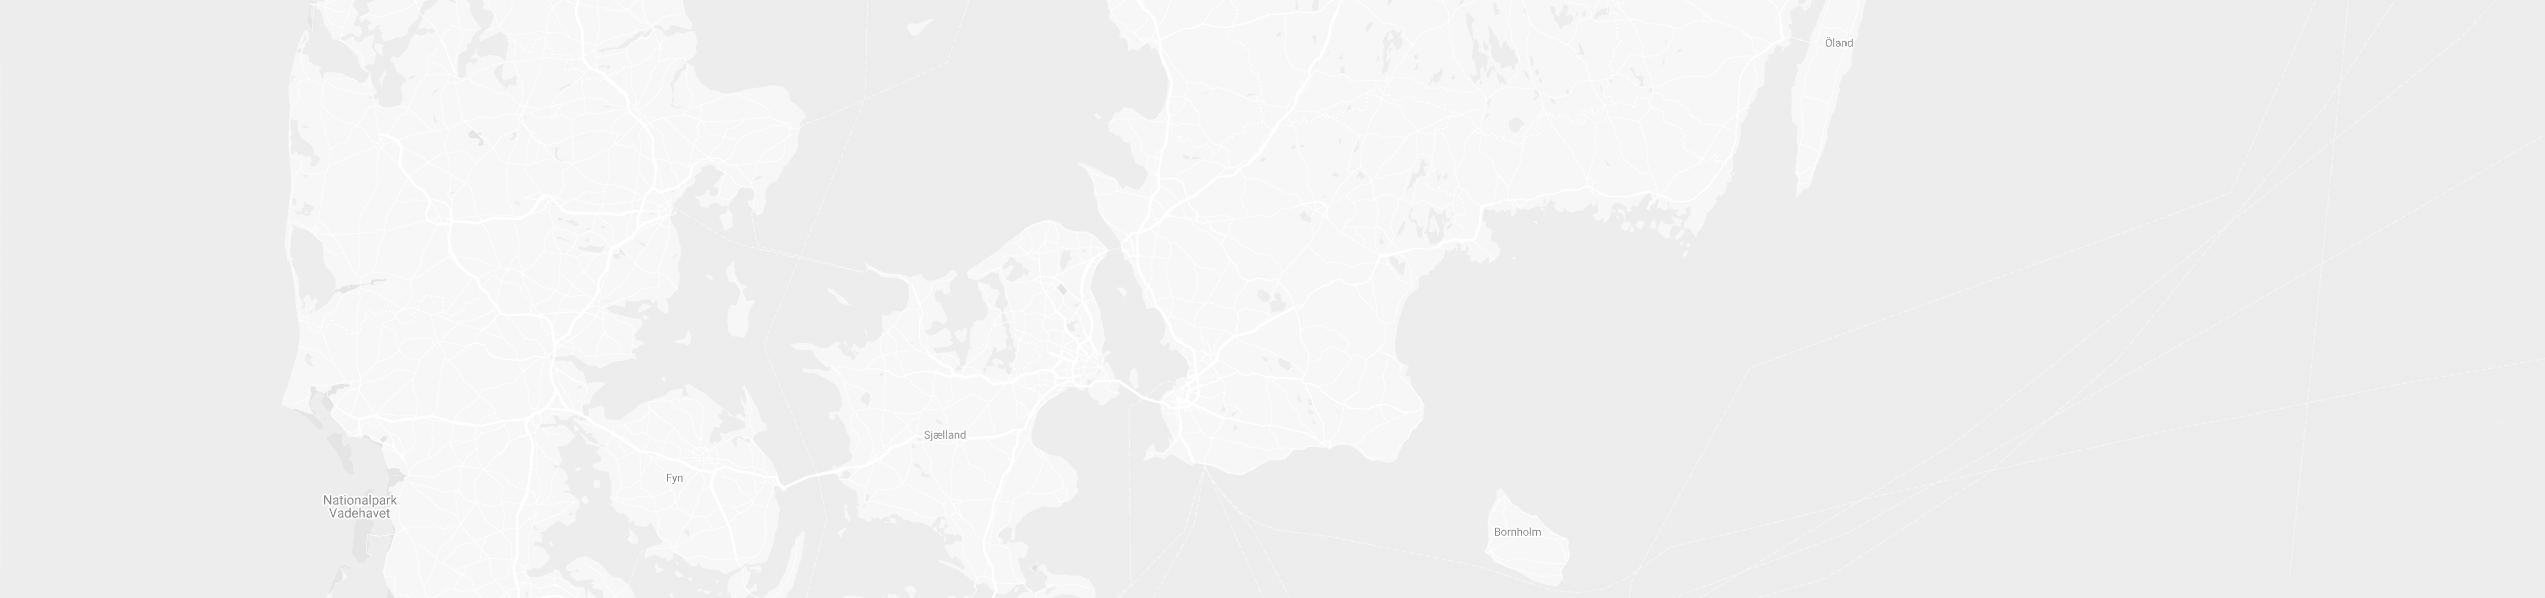 Map of Skåne